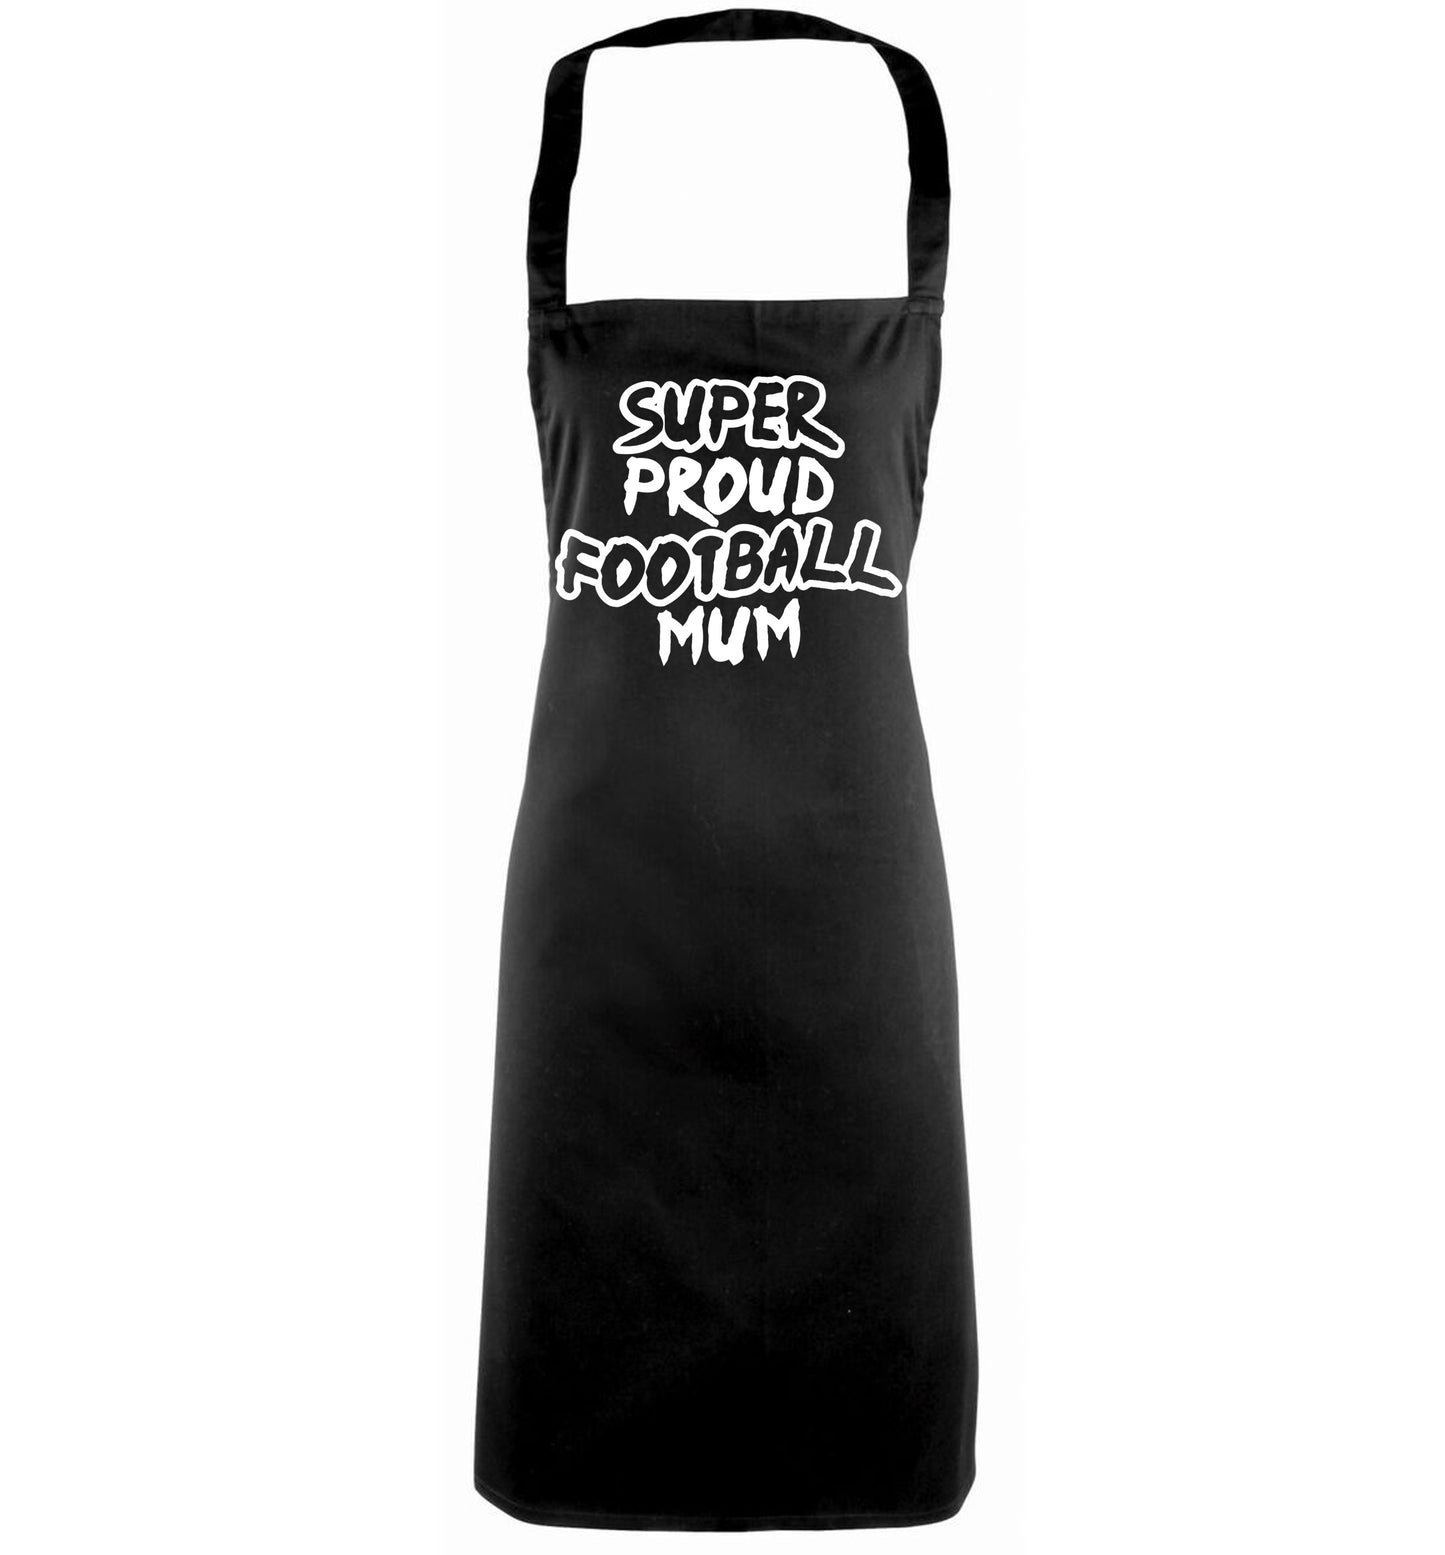 Super proud football mum black apron